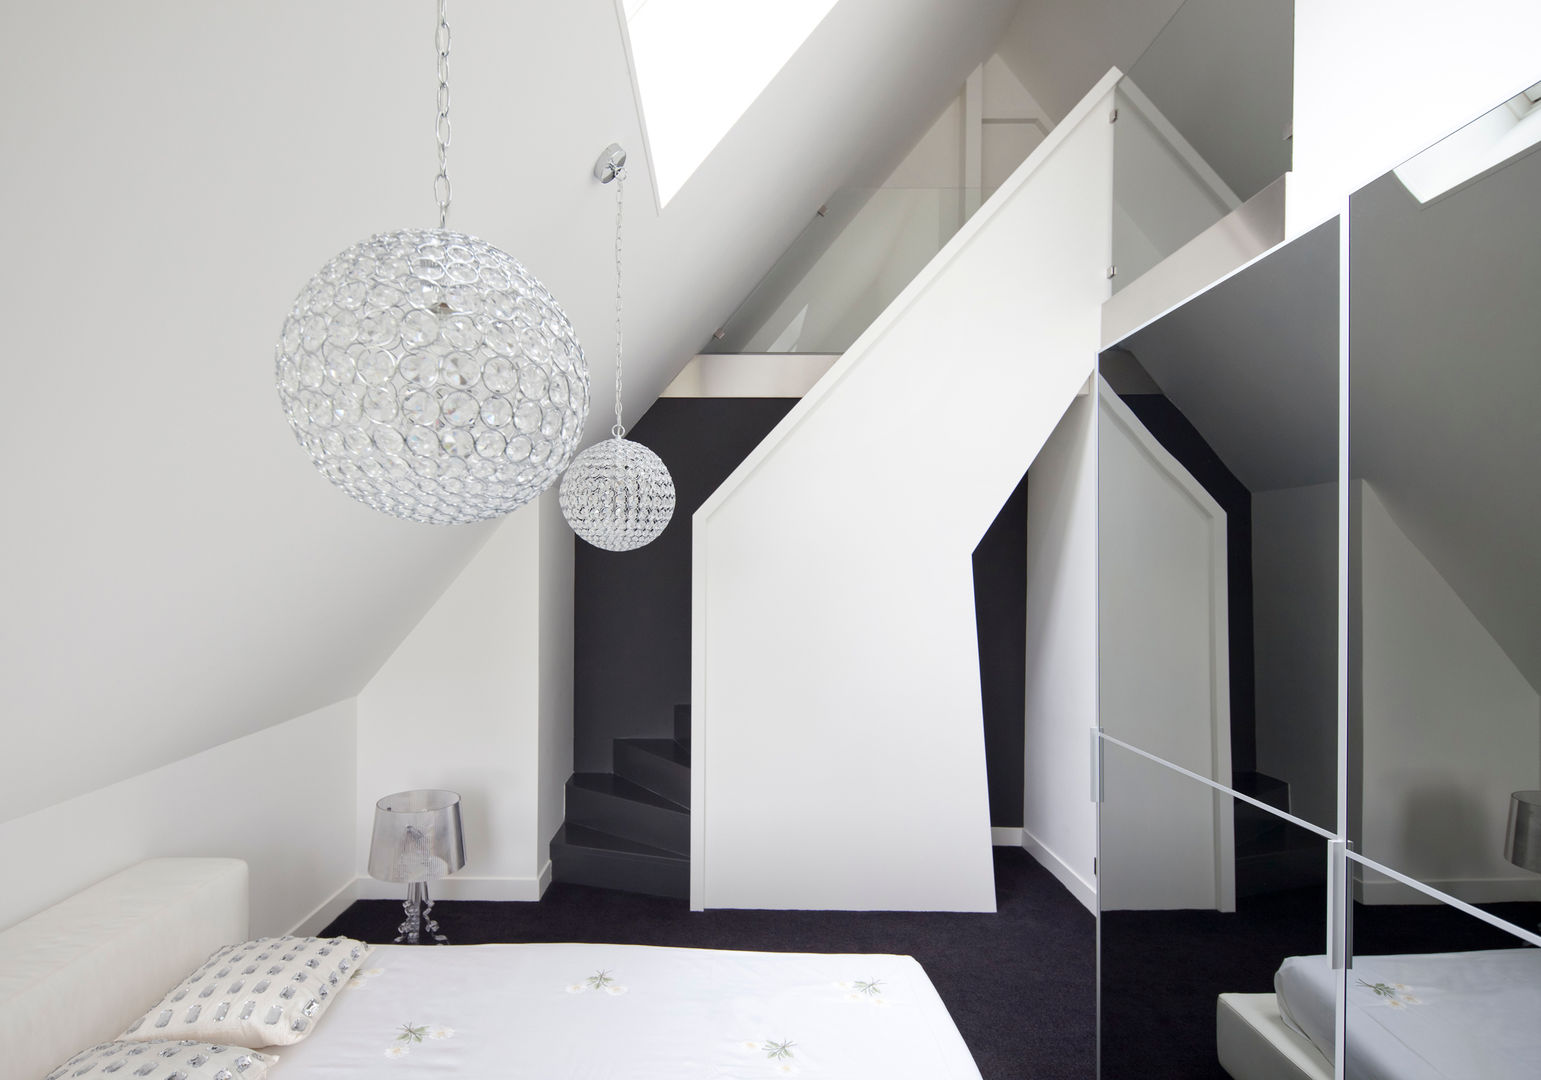 Omgeving & functionaliteit verbonden in een verbazingwekkende villa in Vinkeveen, MEF Architect MEF Architect Dormitorios modernos: Ideas, imágenes y decoración